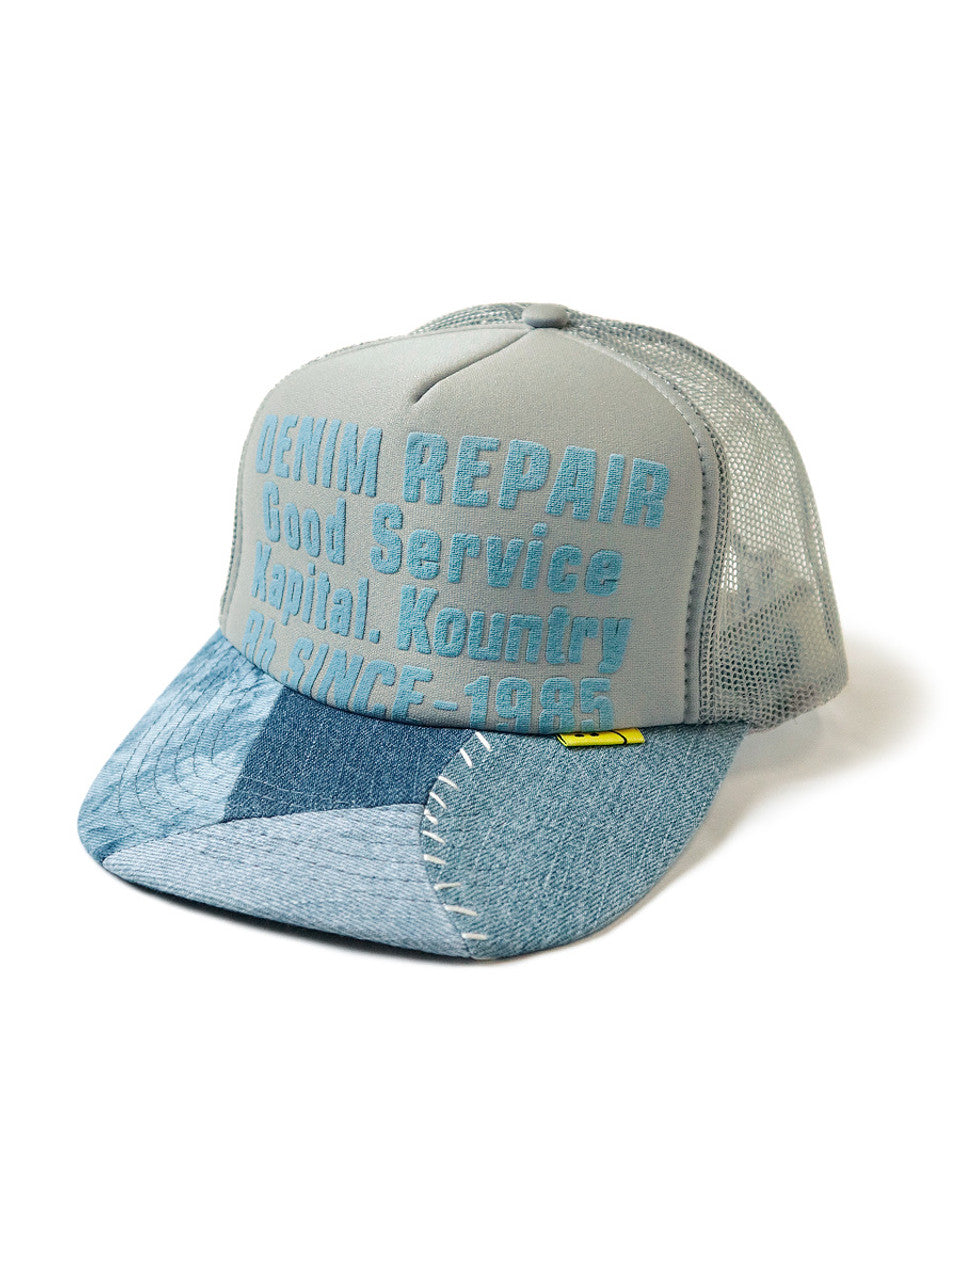 Kapital Denim Repair Service Denim Reconstruction Truck Cap - Gray